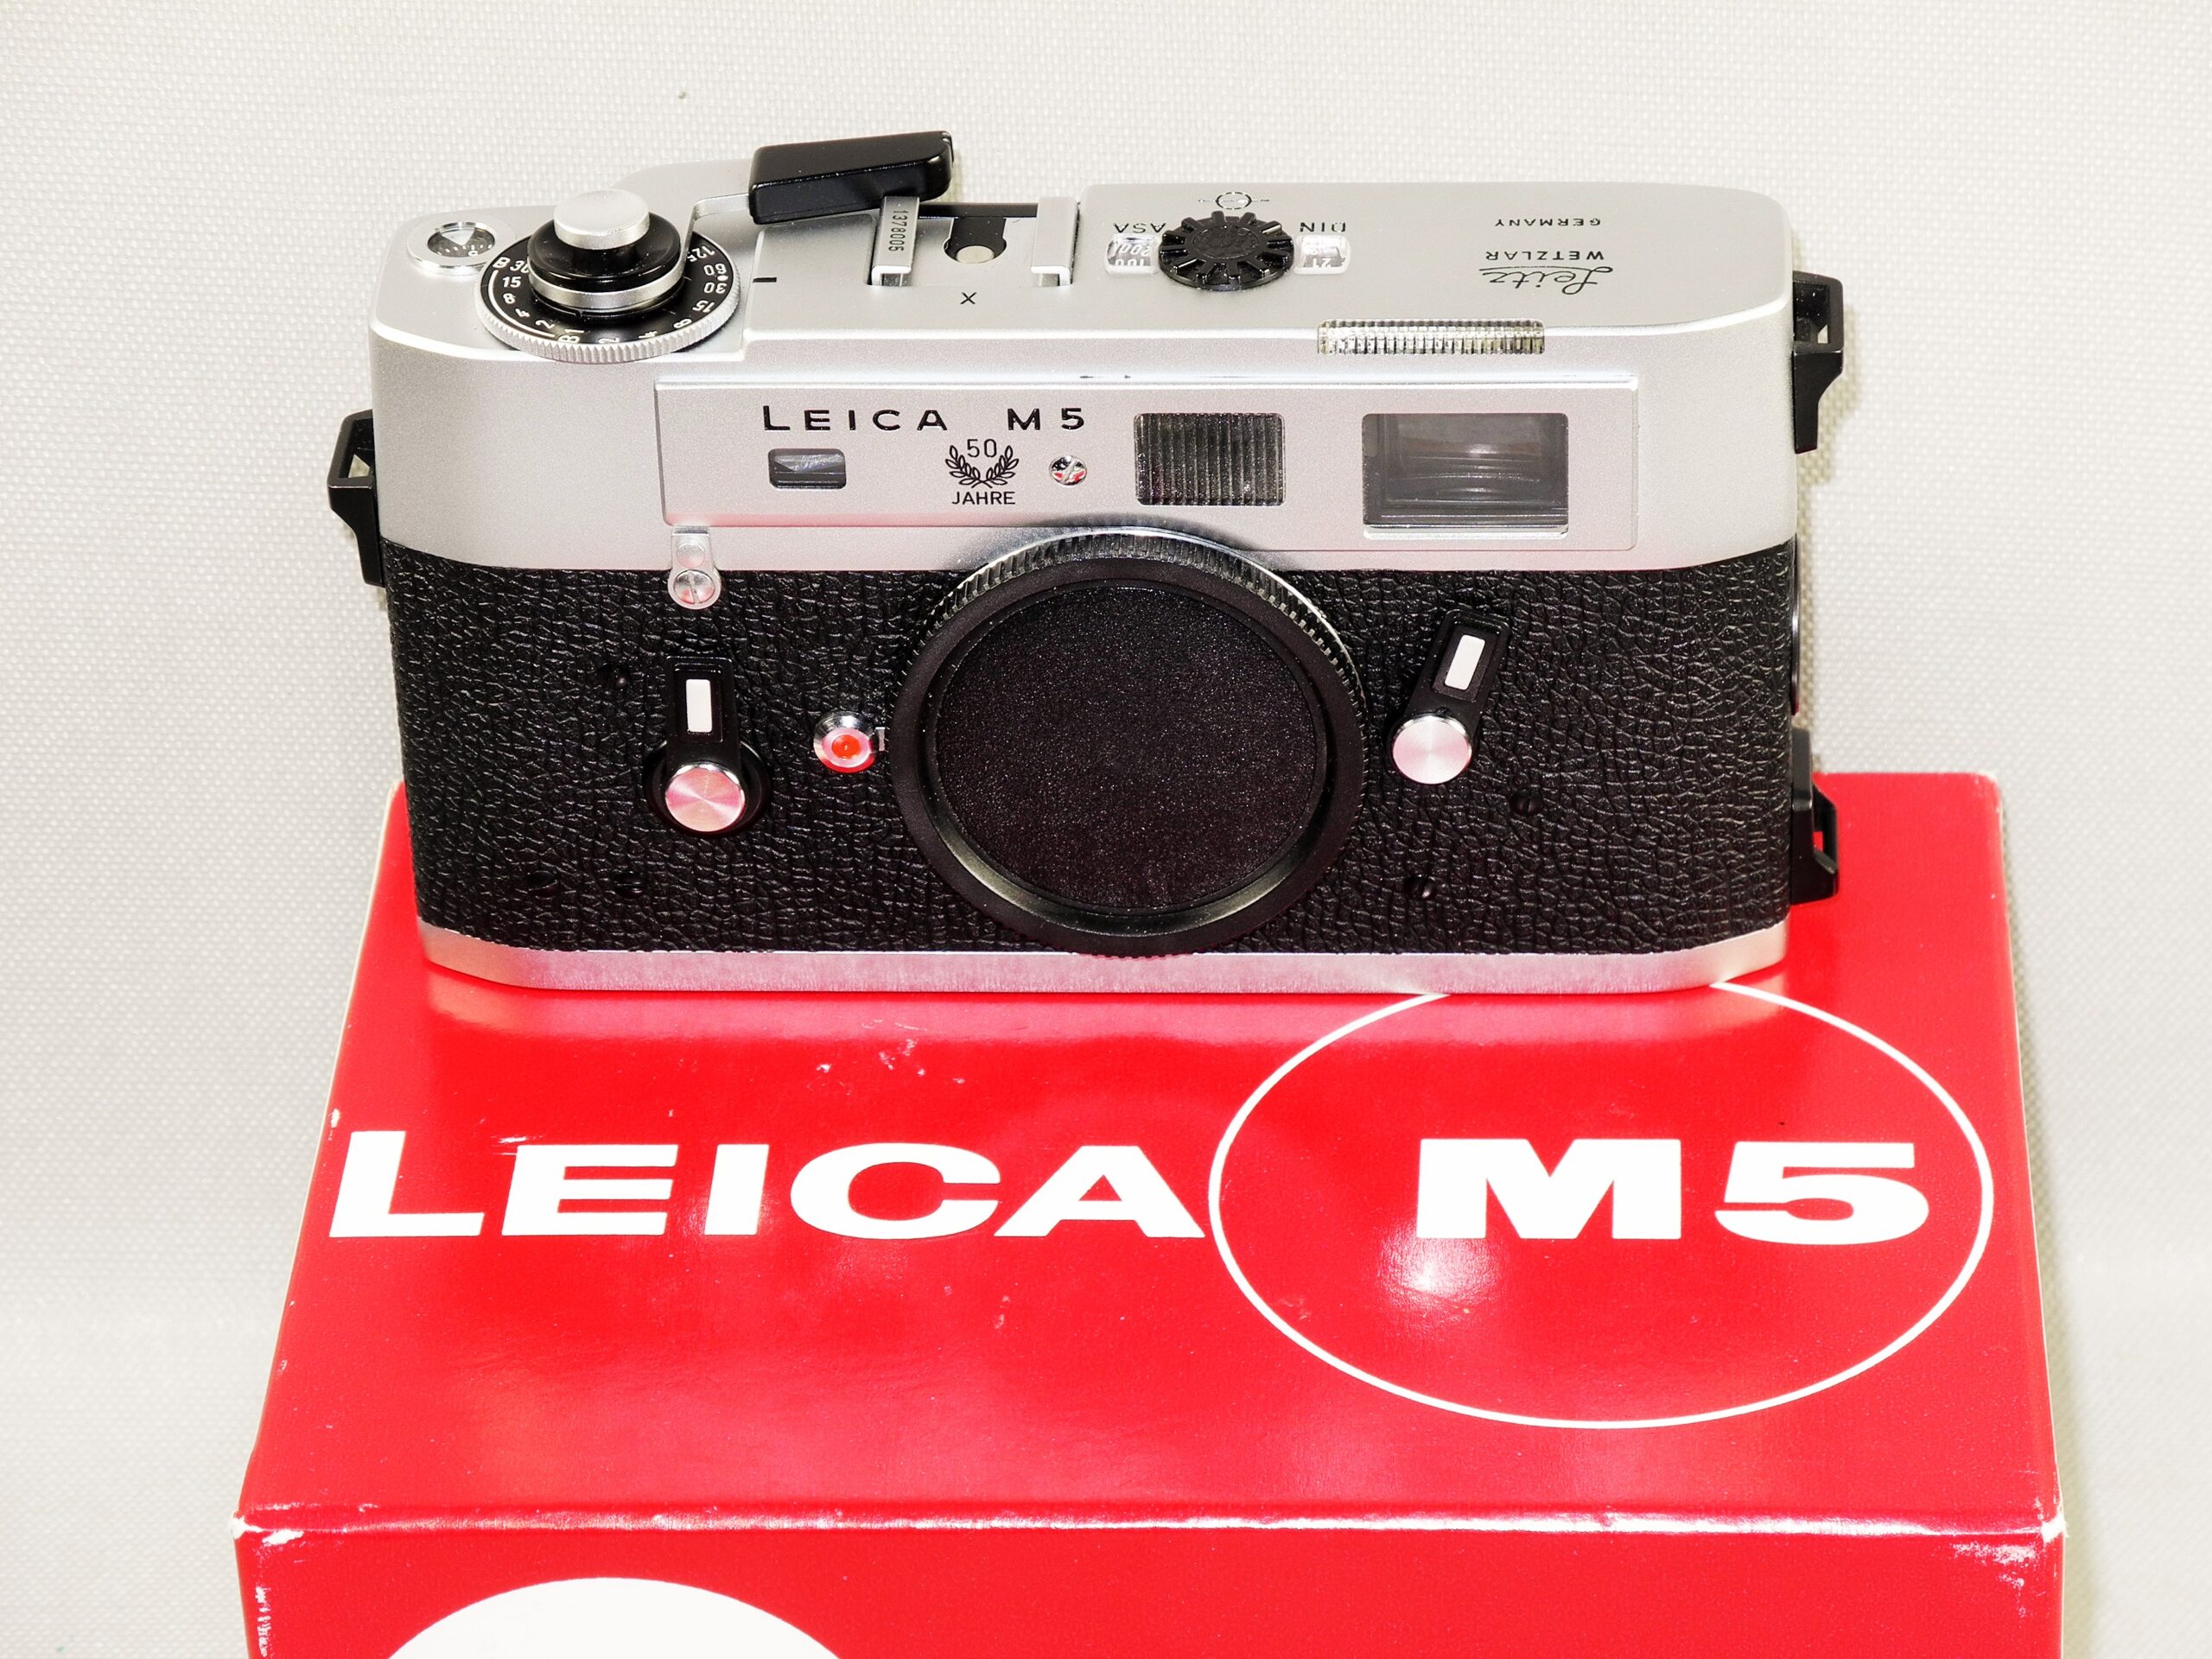 Leica M5 Silver Chrome “50 JAHRE “Anniversary with original box 